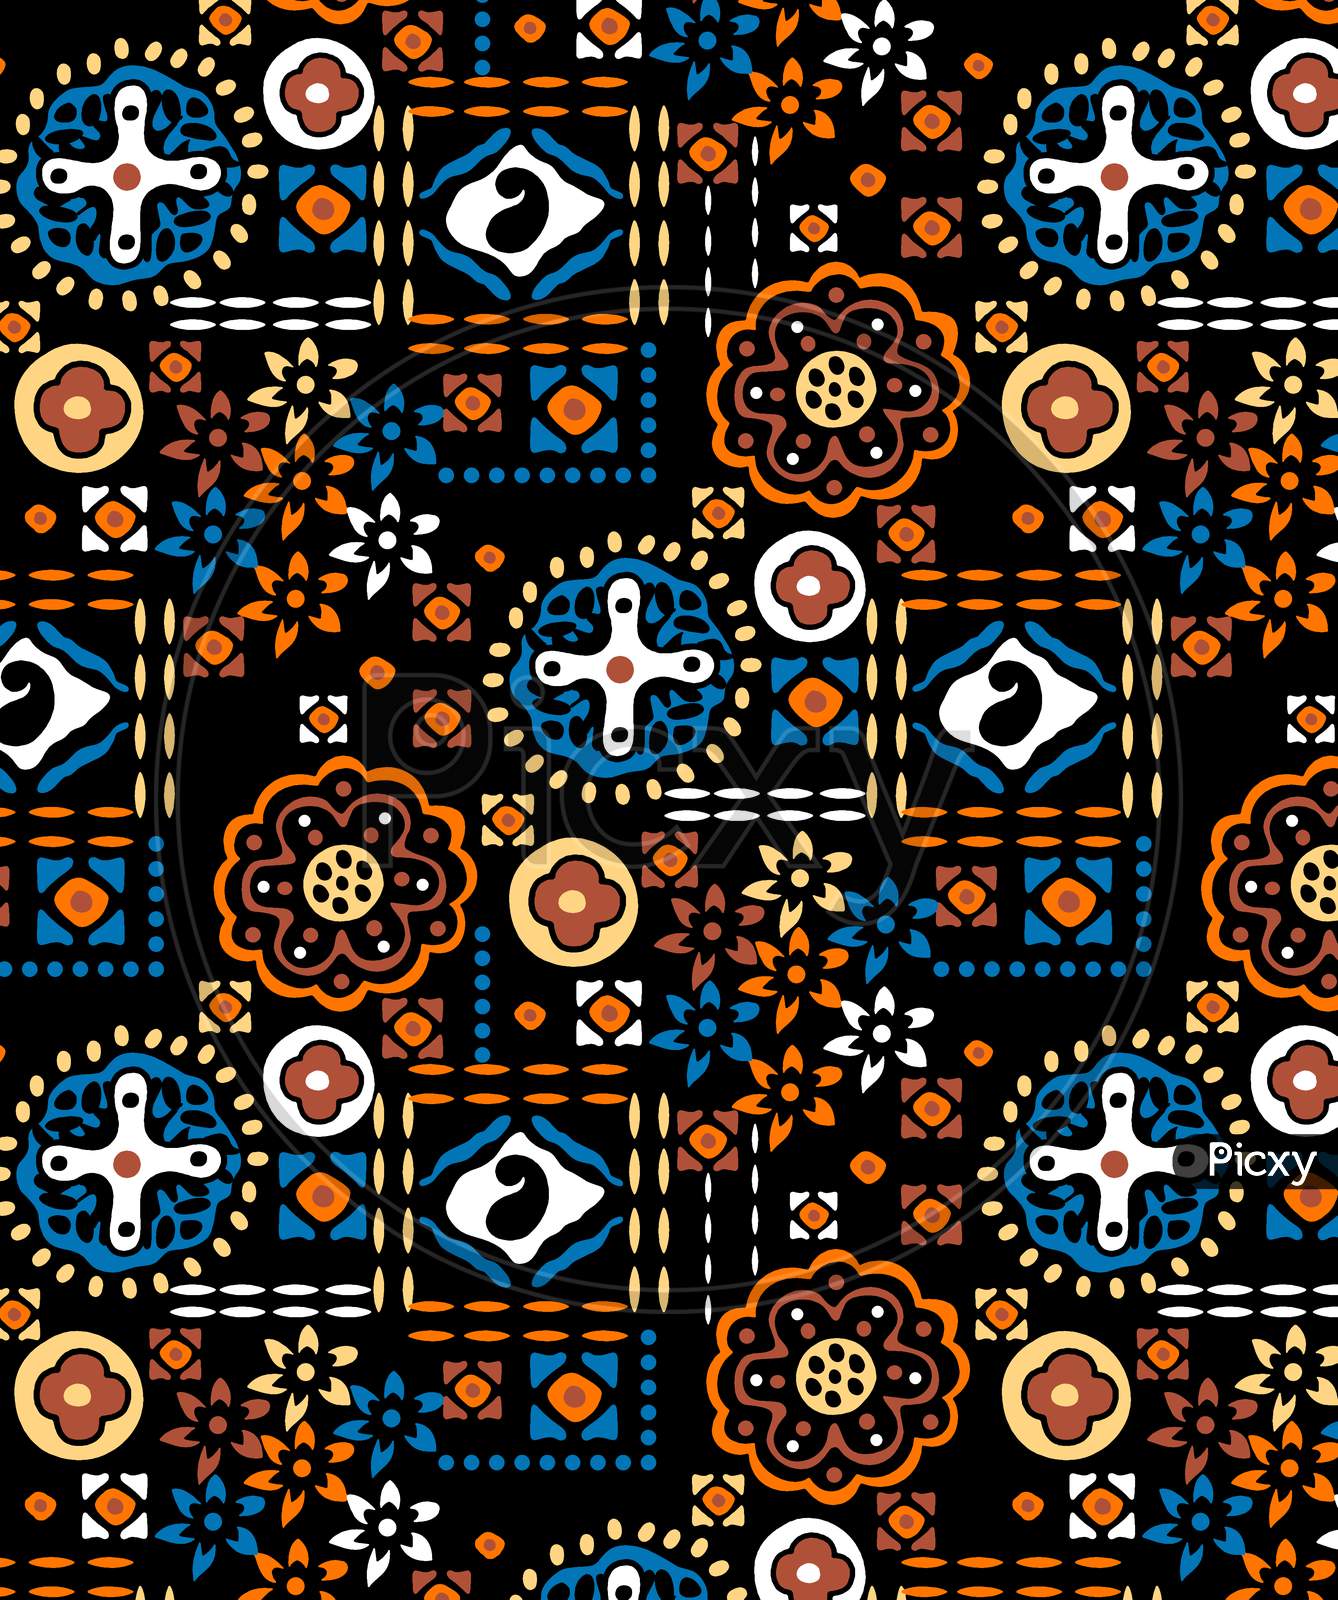 Flower butti motif design in textile